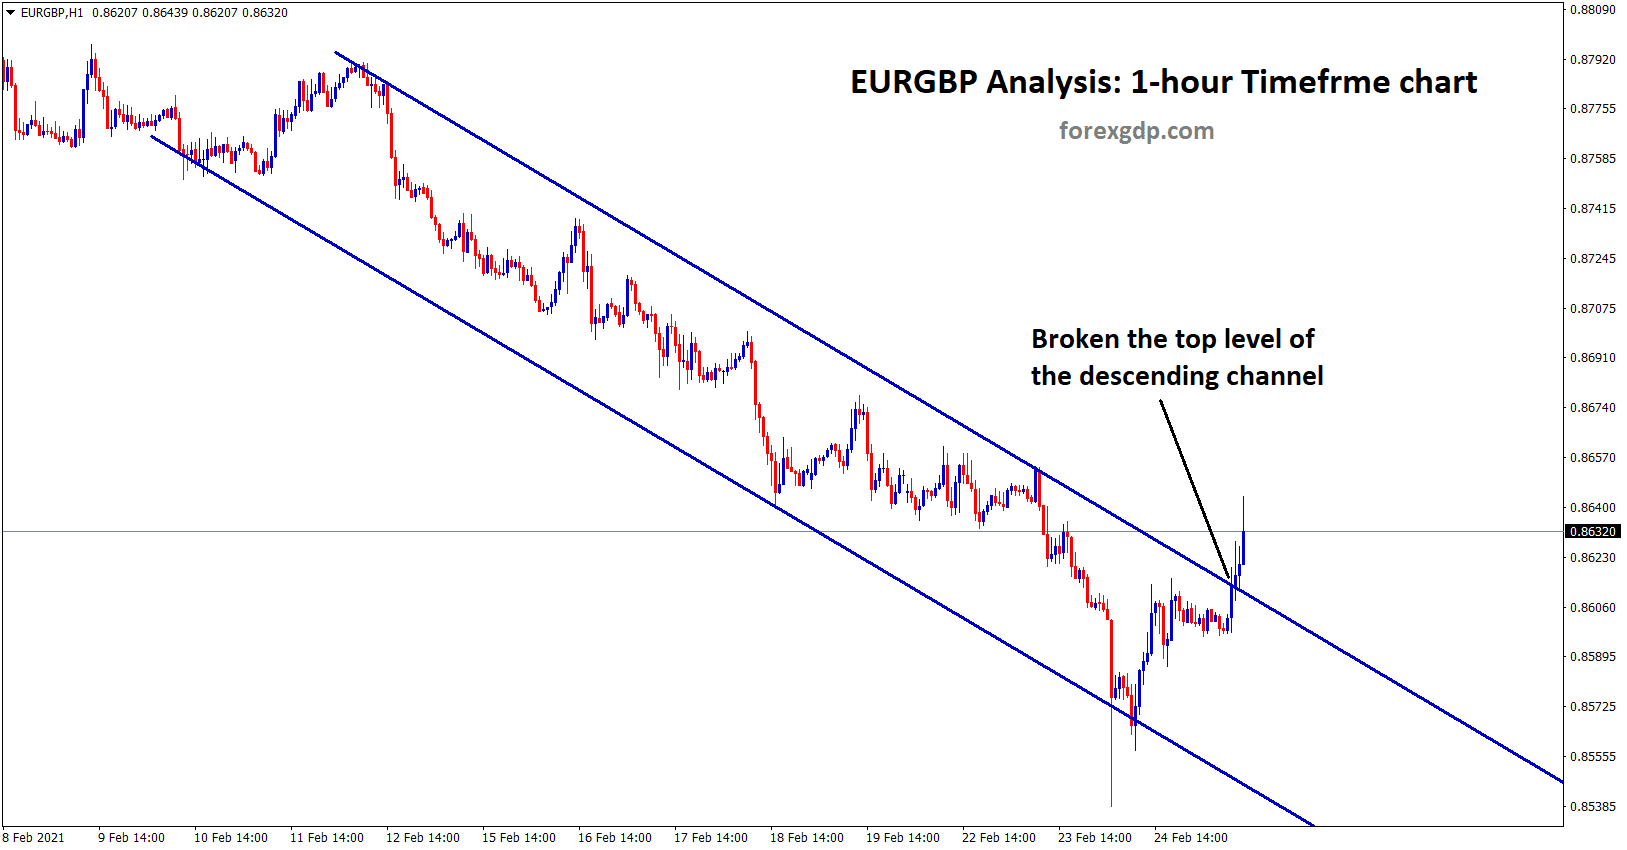 eurgbp has broken the top level of the descending channel